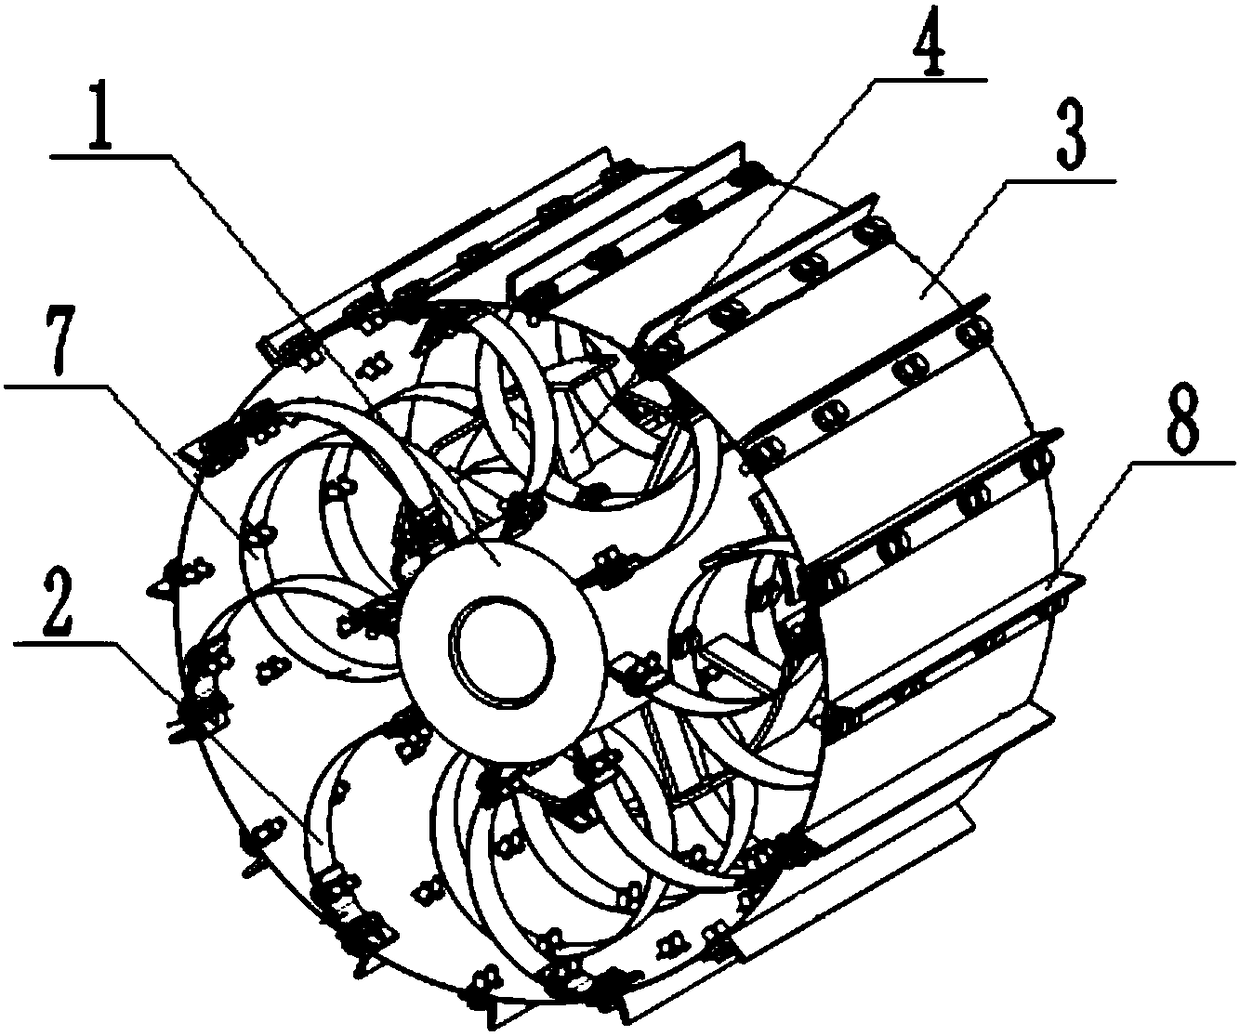 Mars rover elastic wheel